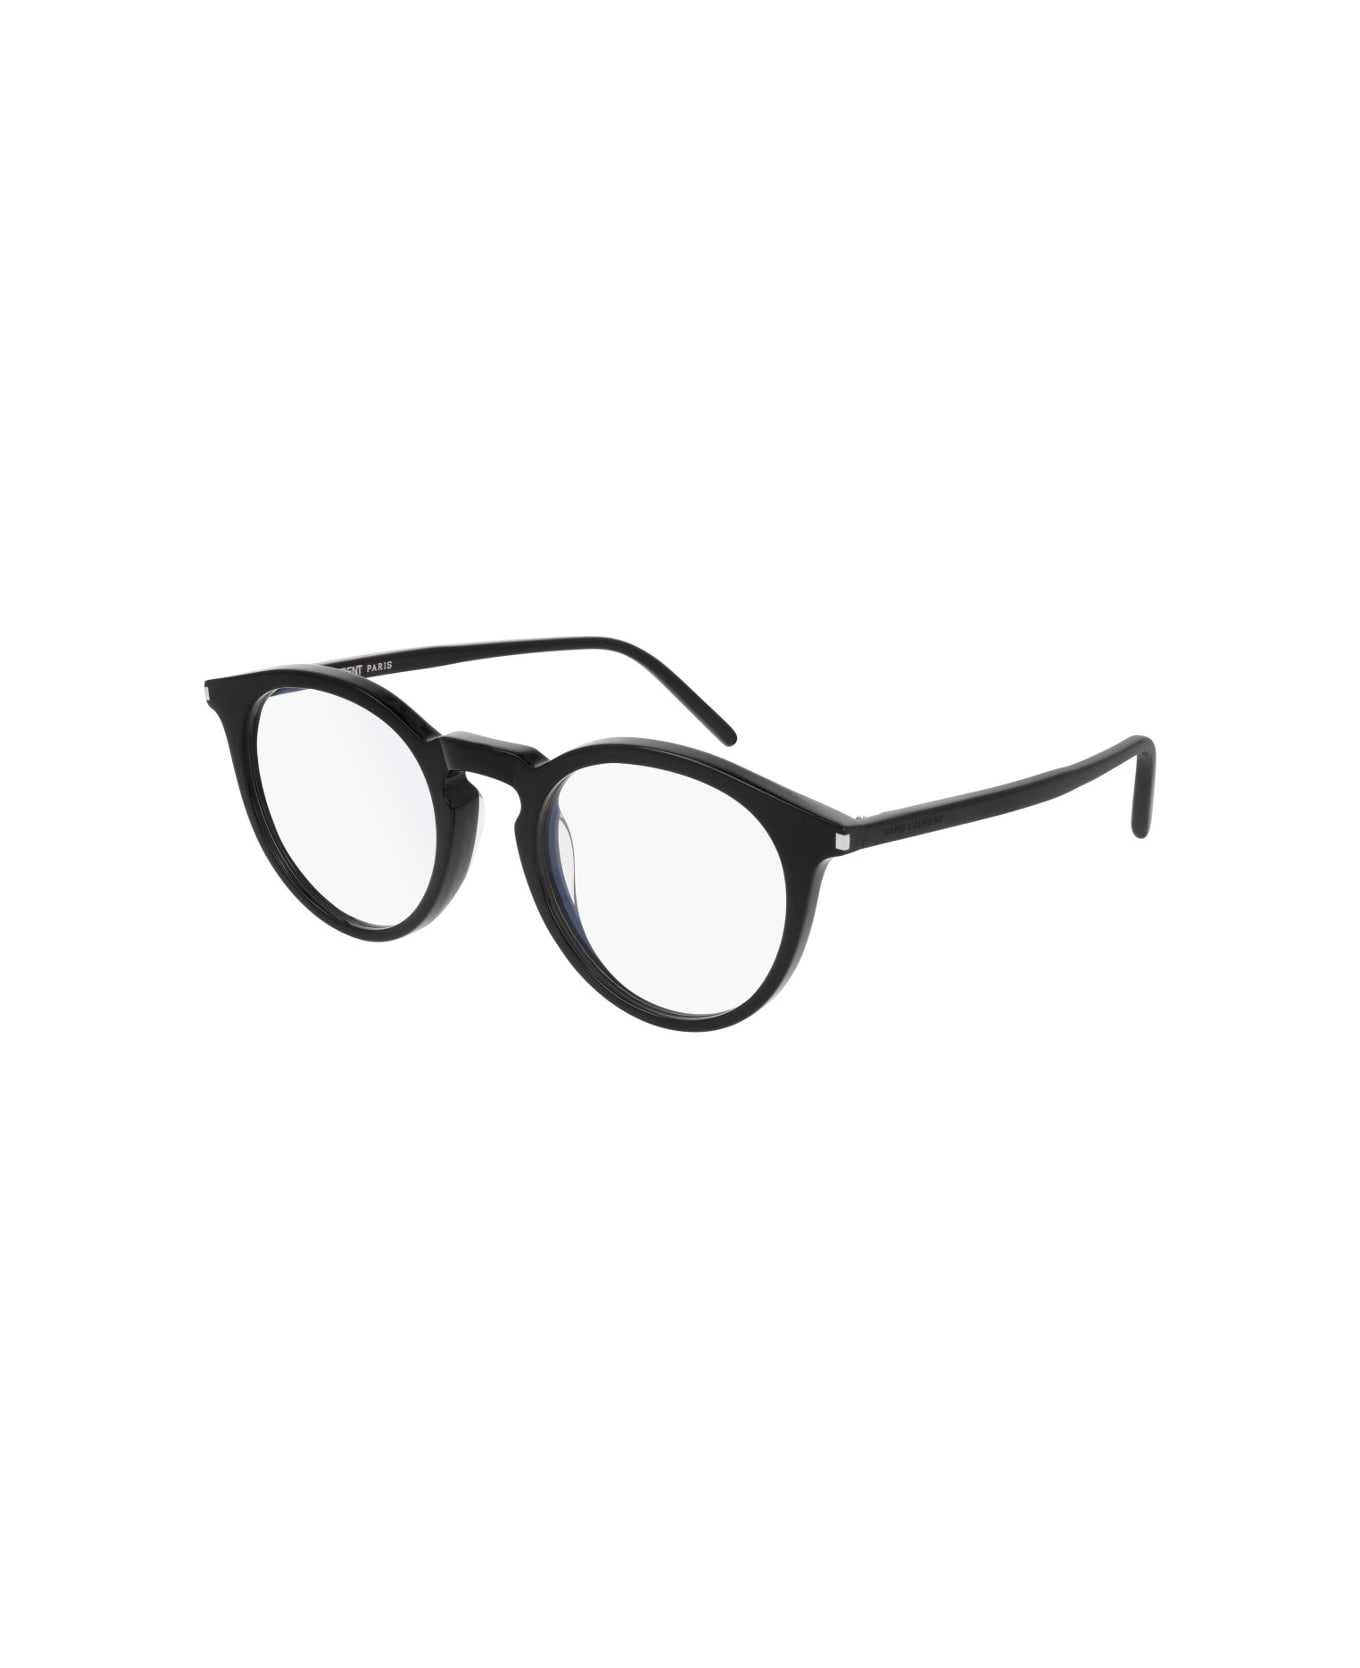 Saint Laurent Eyewear SL347 005 Glasses - Nero アイウェア